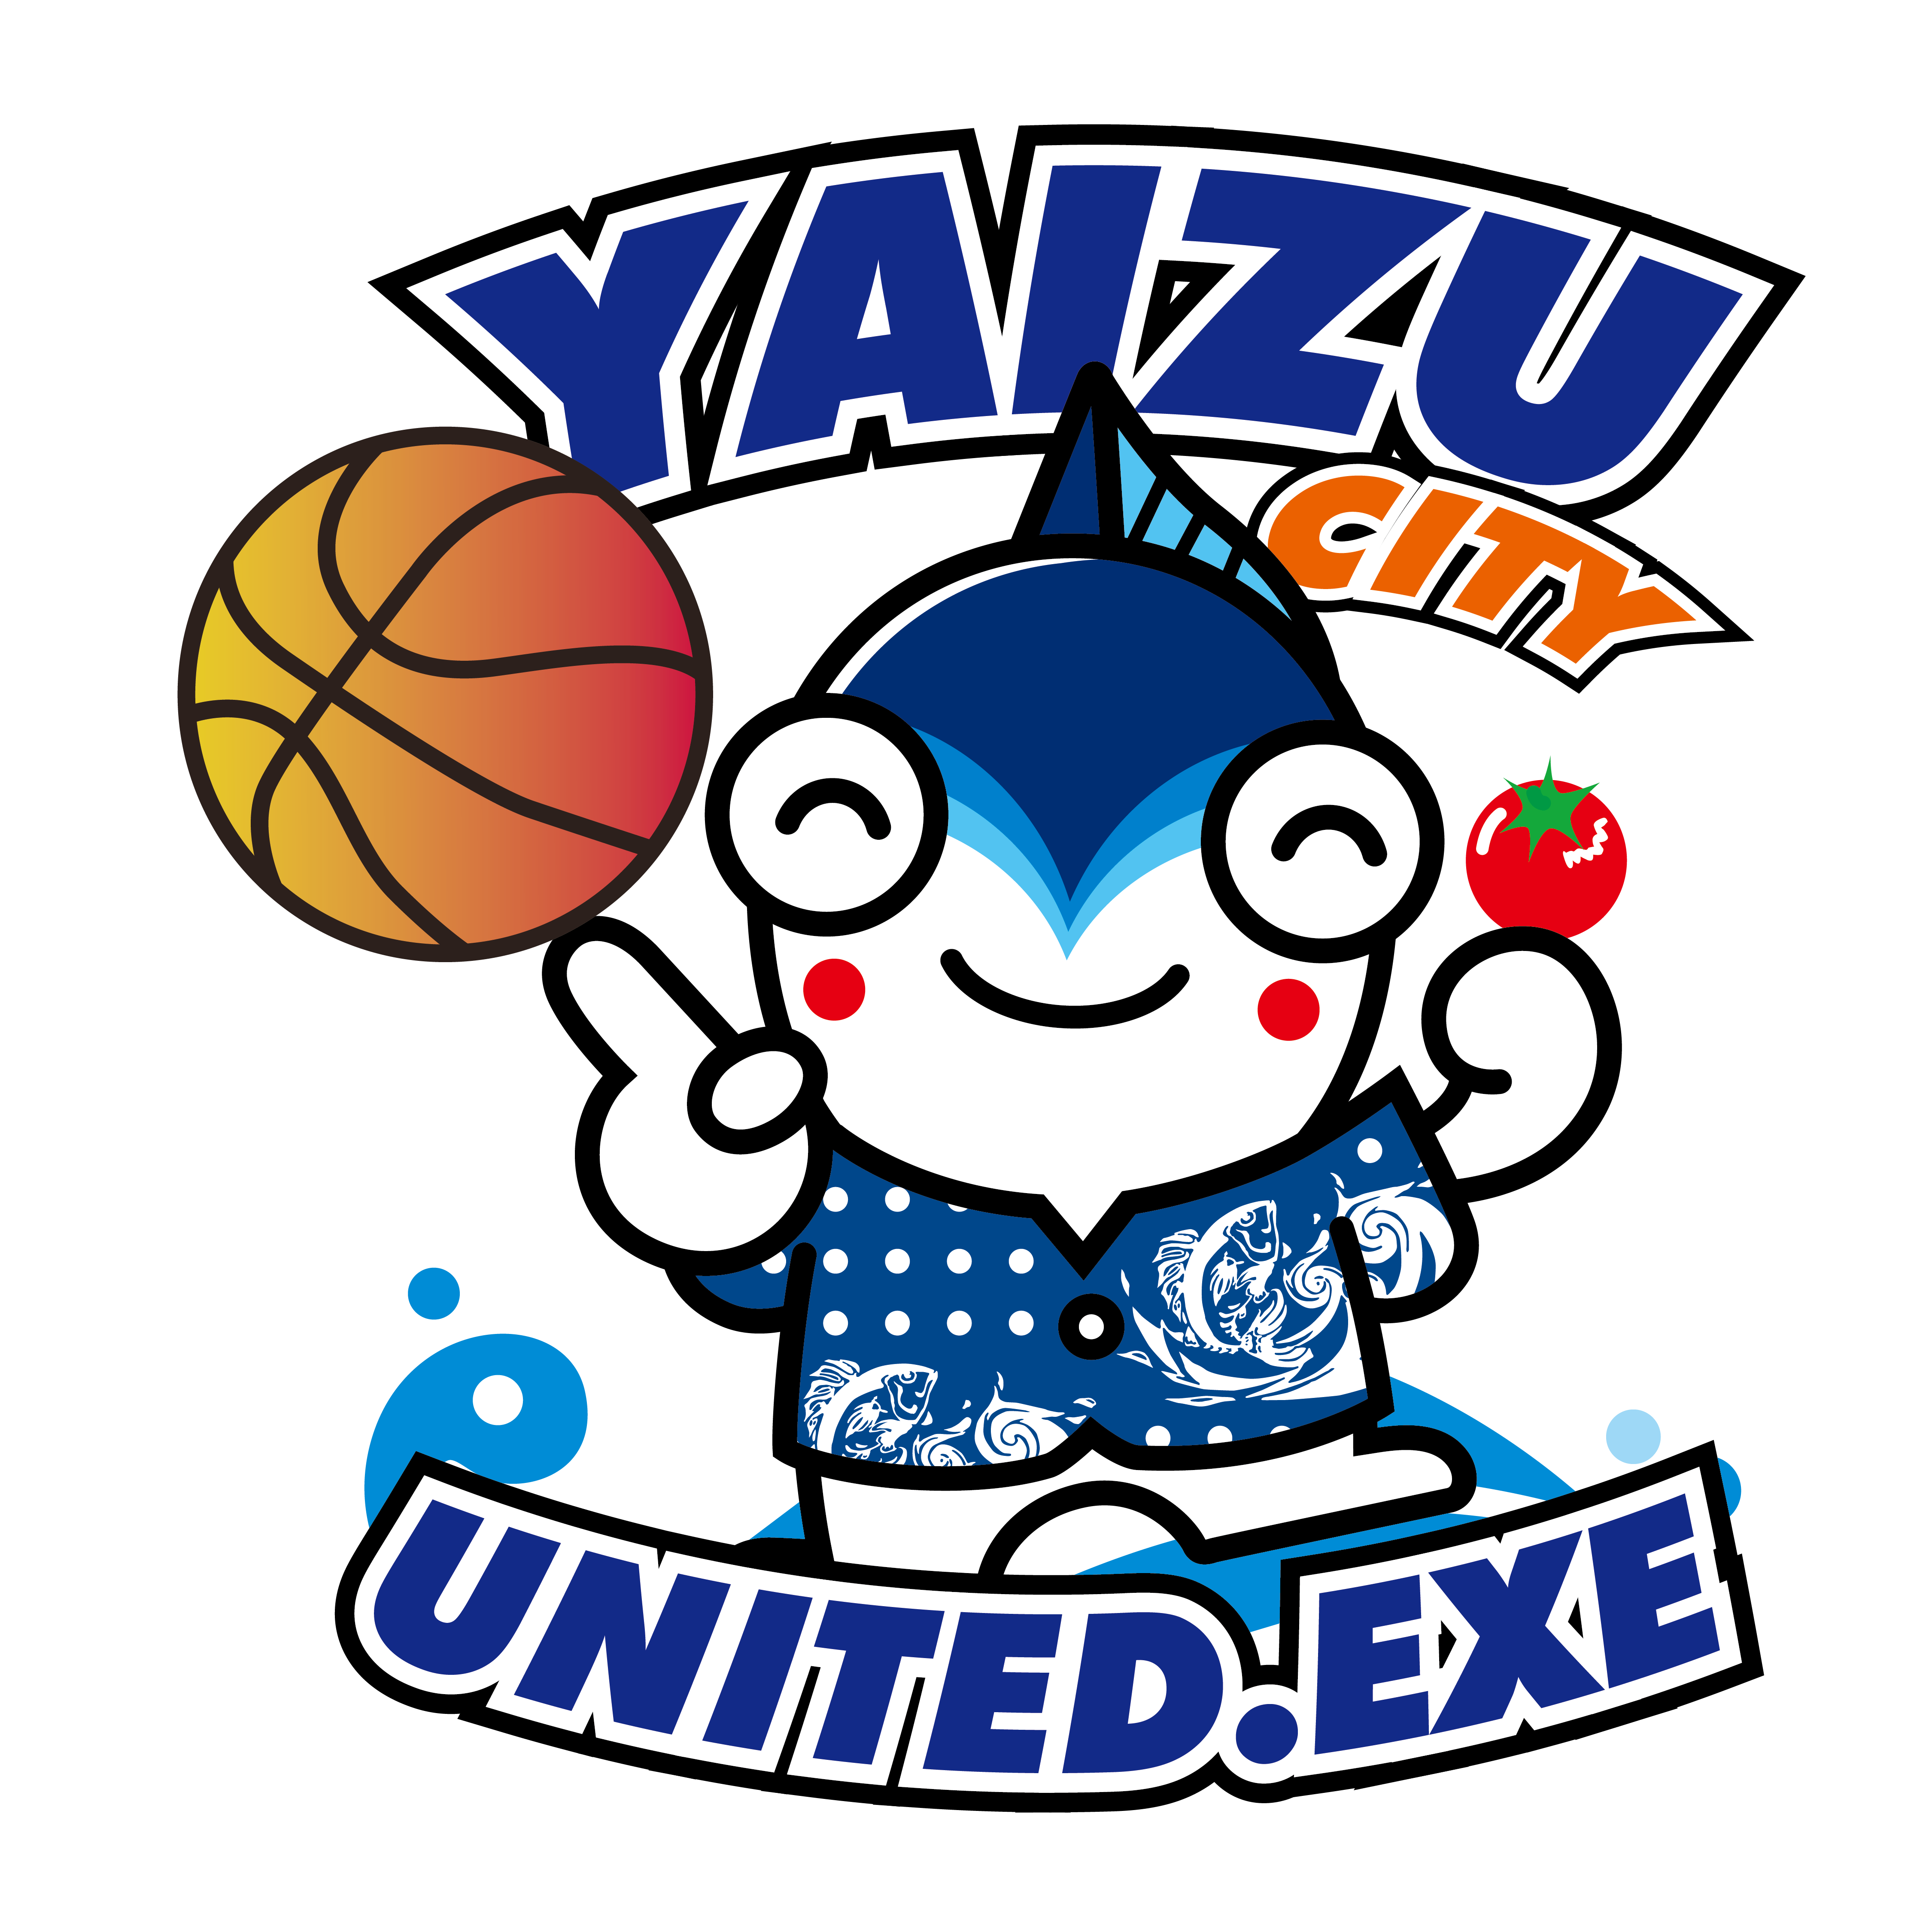 yaizu_city_united